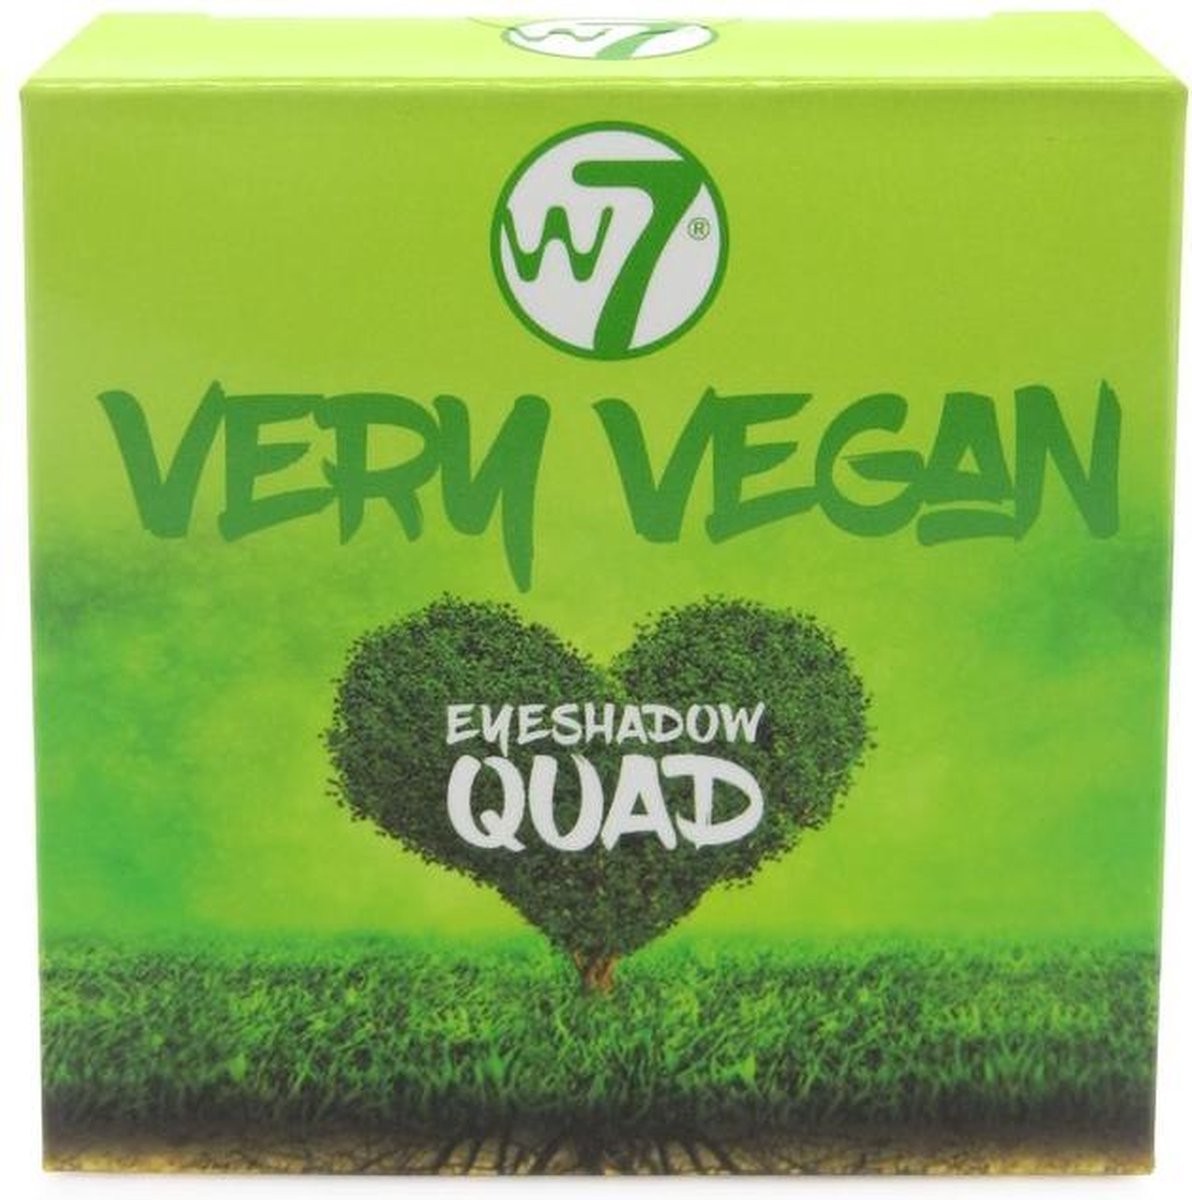 W7 Very Vegan Quad Eyeshadow Warm Winter